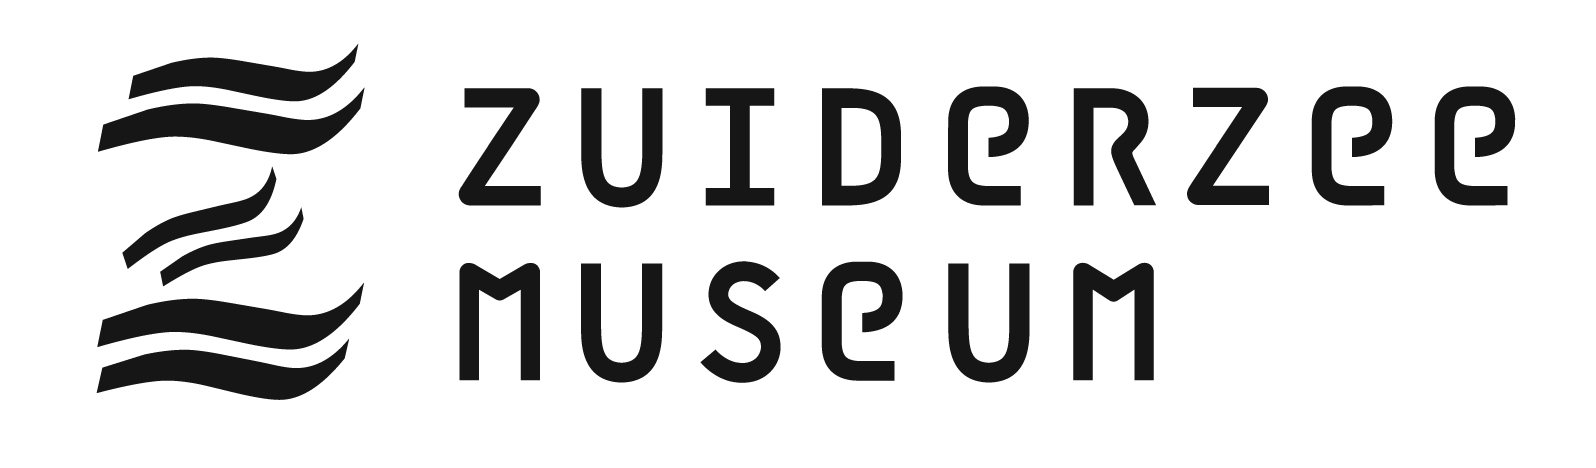 logo zuiderzeemuseum